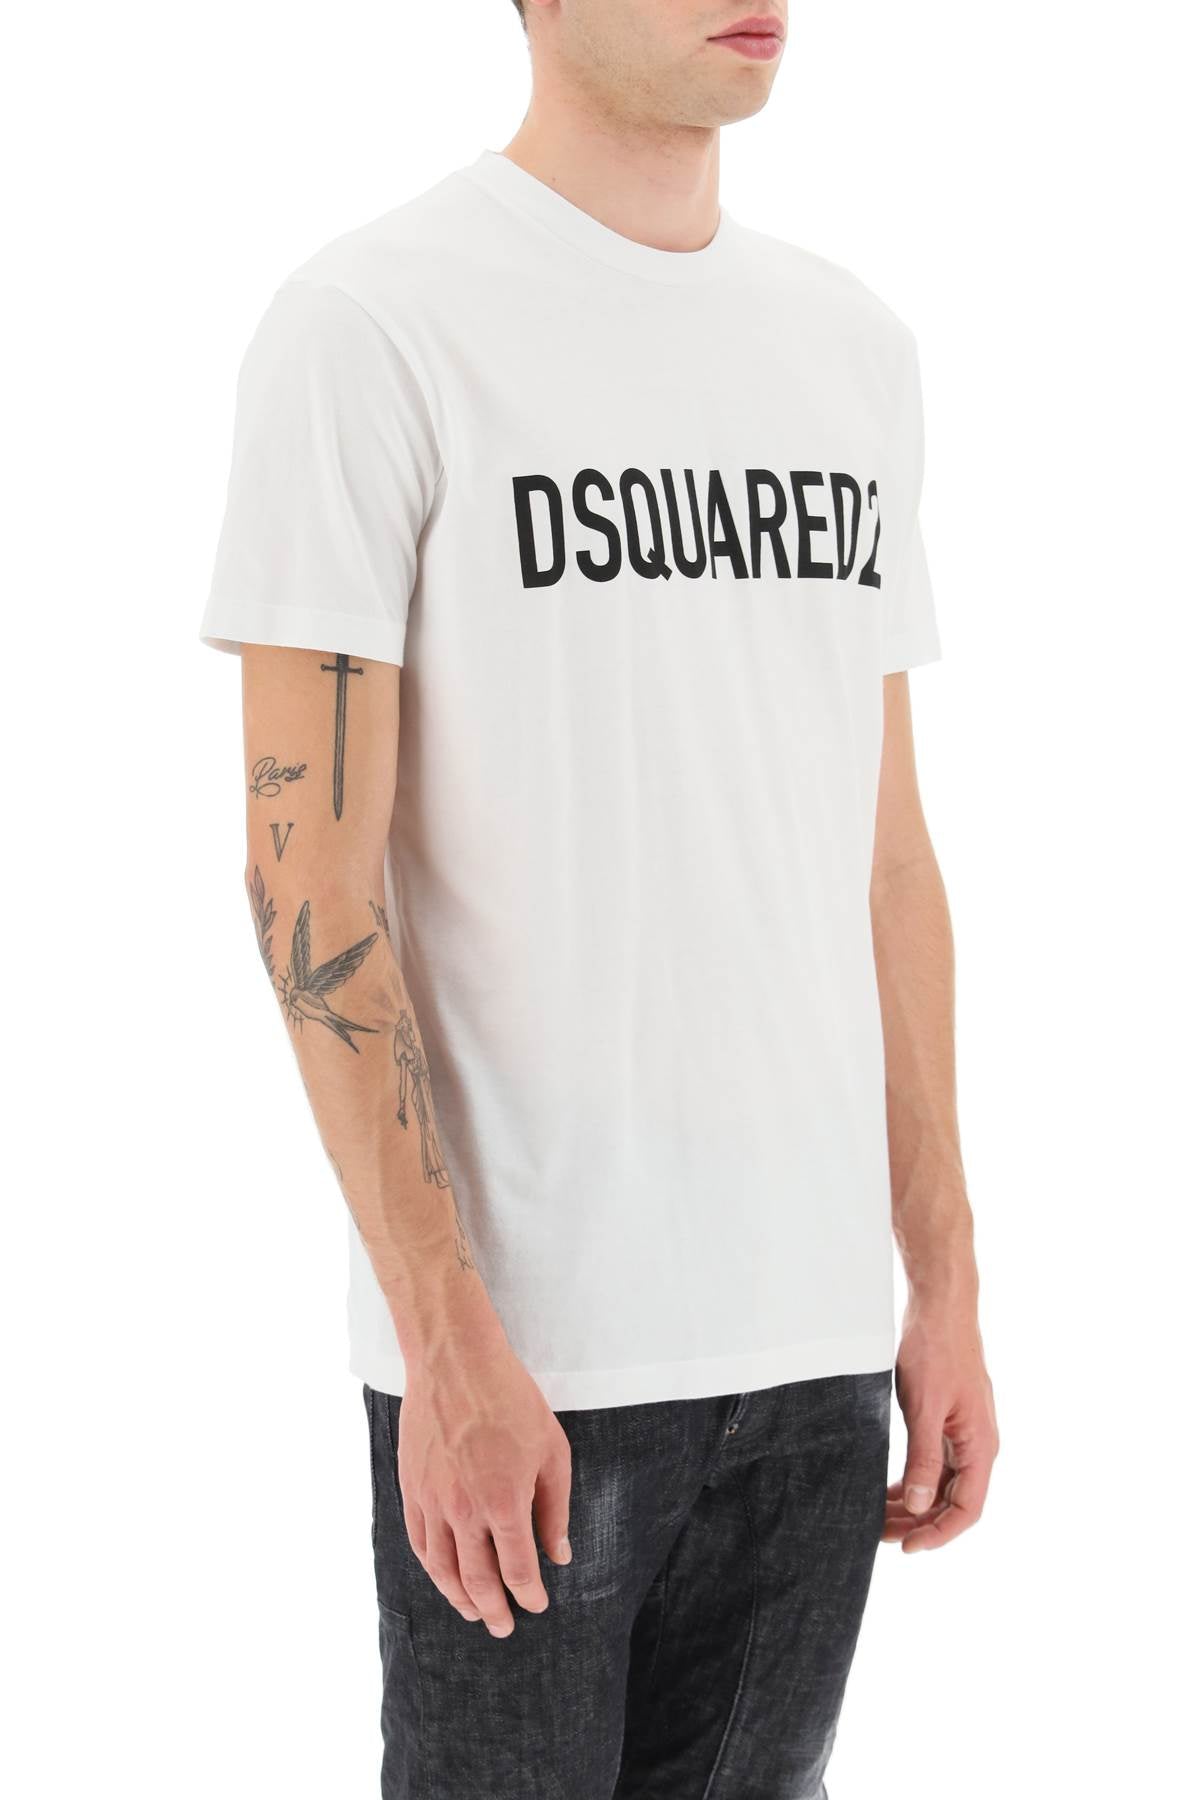 Dsquared2 'Cool' Logo Print T Shirt   Bianco